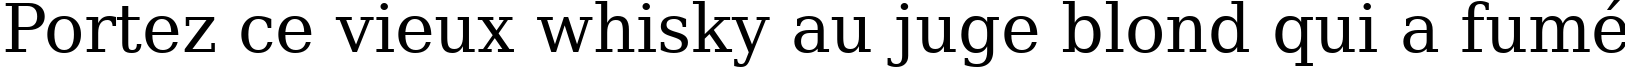 Пример написания шрифтом ae_Haramain текста на французском